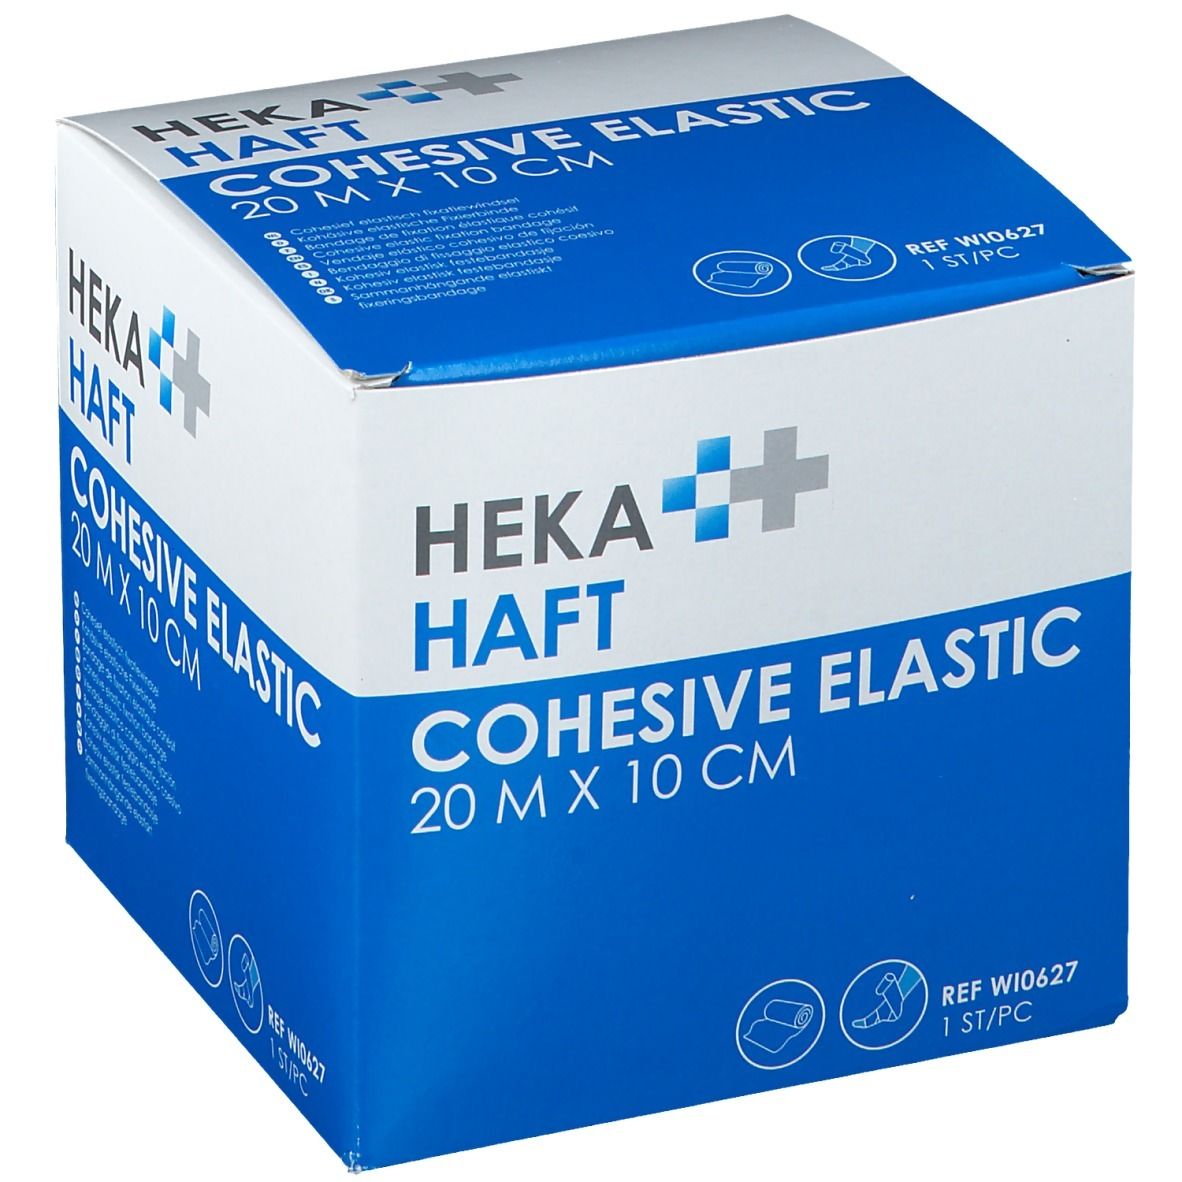 Heka Haft Cohesive Elastic 20 m x 10 cm